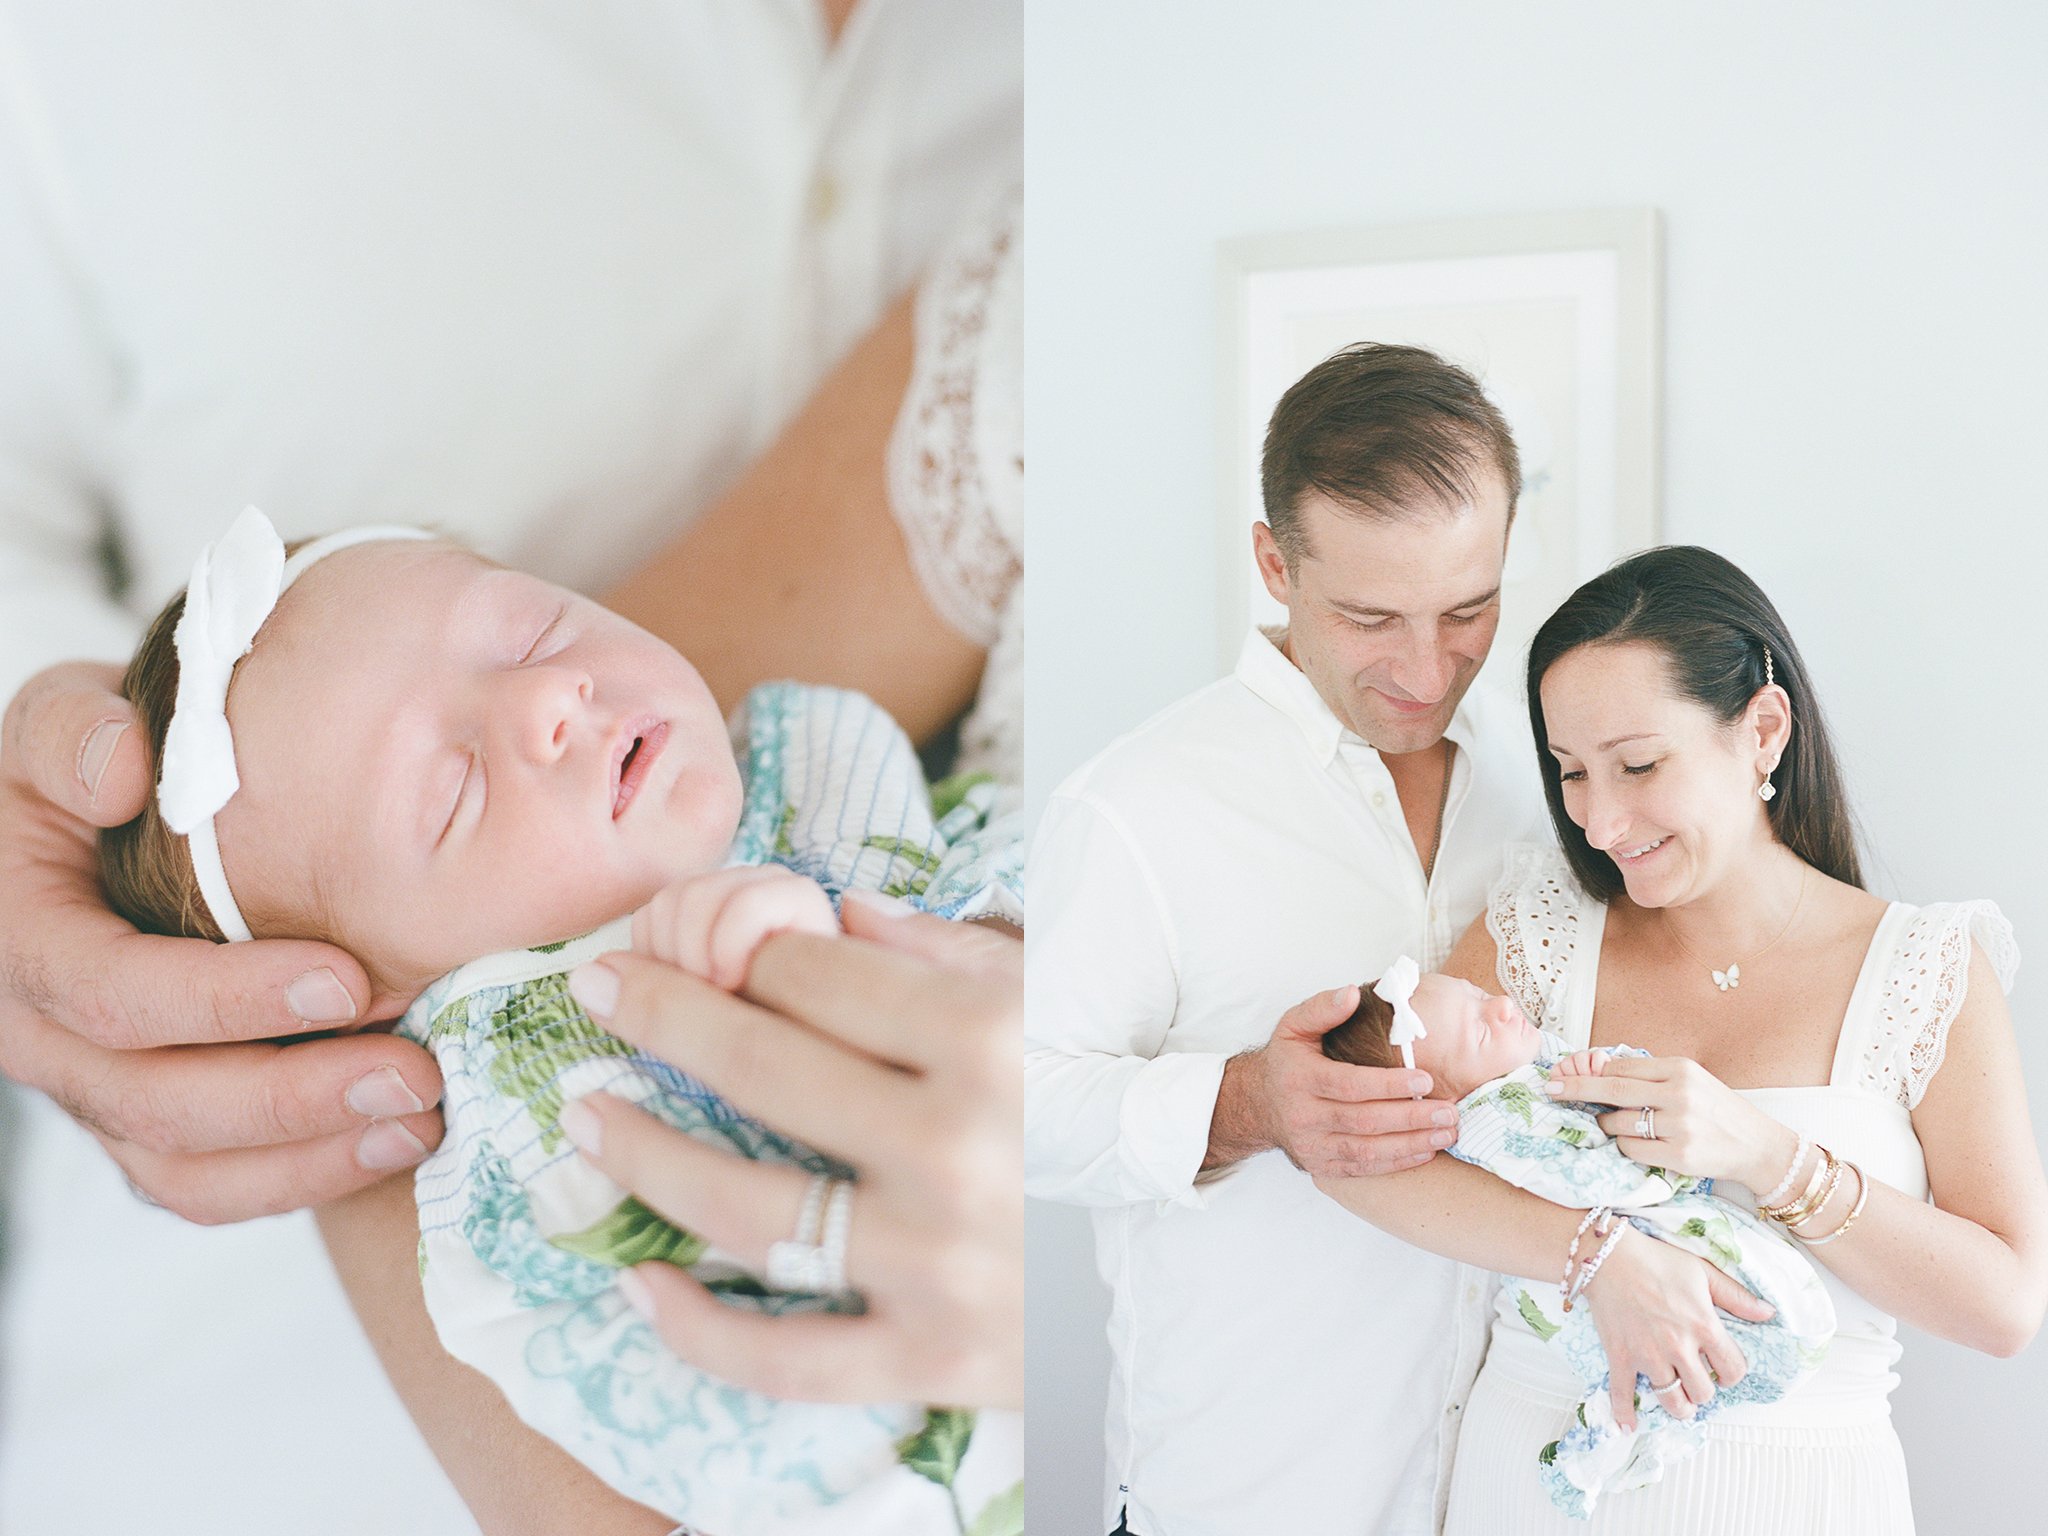 Newborn Photography in The Hamptons, Long Island